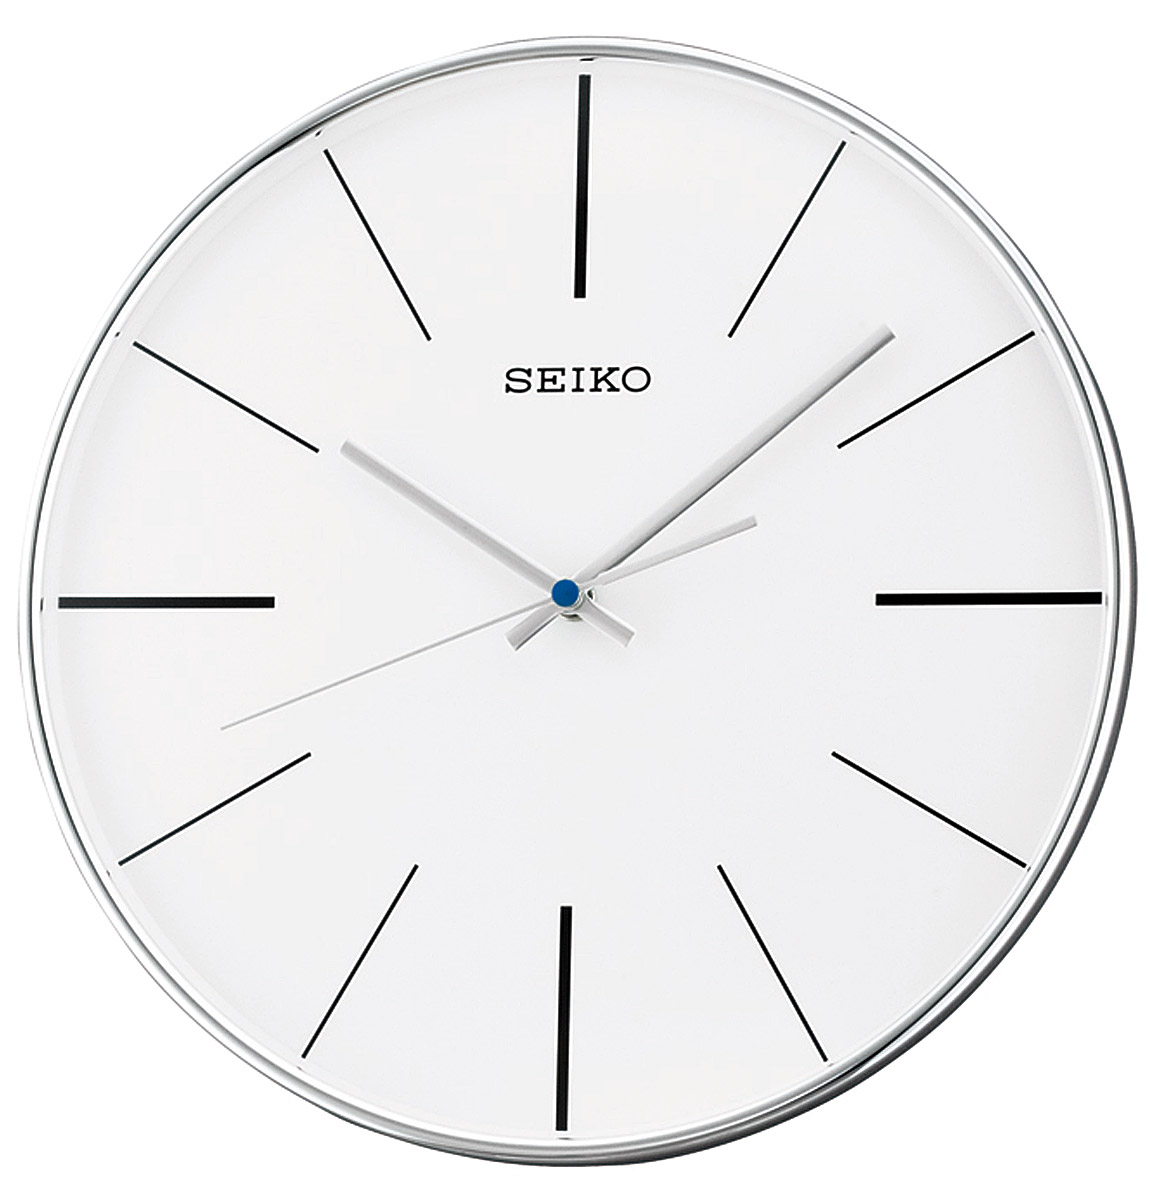 Размер циферблата часов. Настенные часы Seiko qxa634a. Часы настенные кварцевые Seiko qxa653k. Настенные часы Seiko qxa020s. Настенные часы Seiko qxa342s.